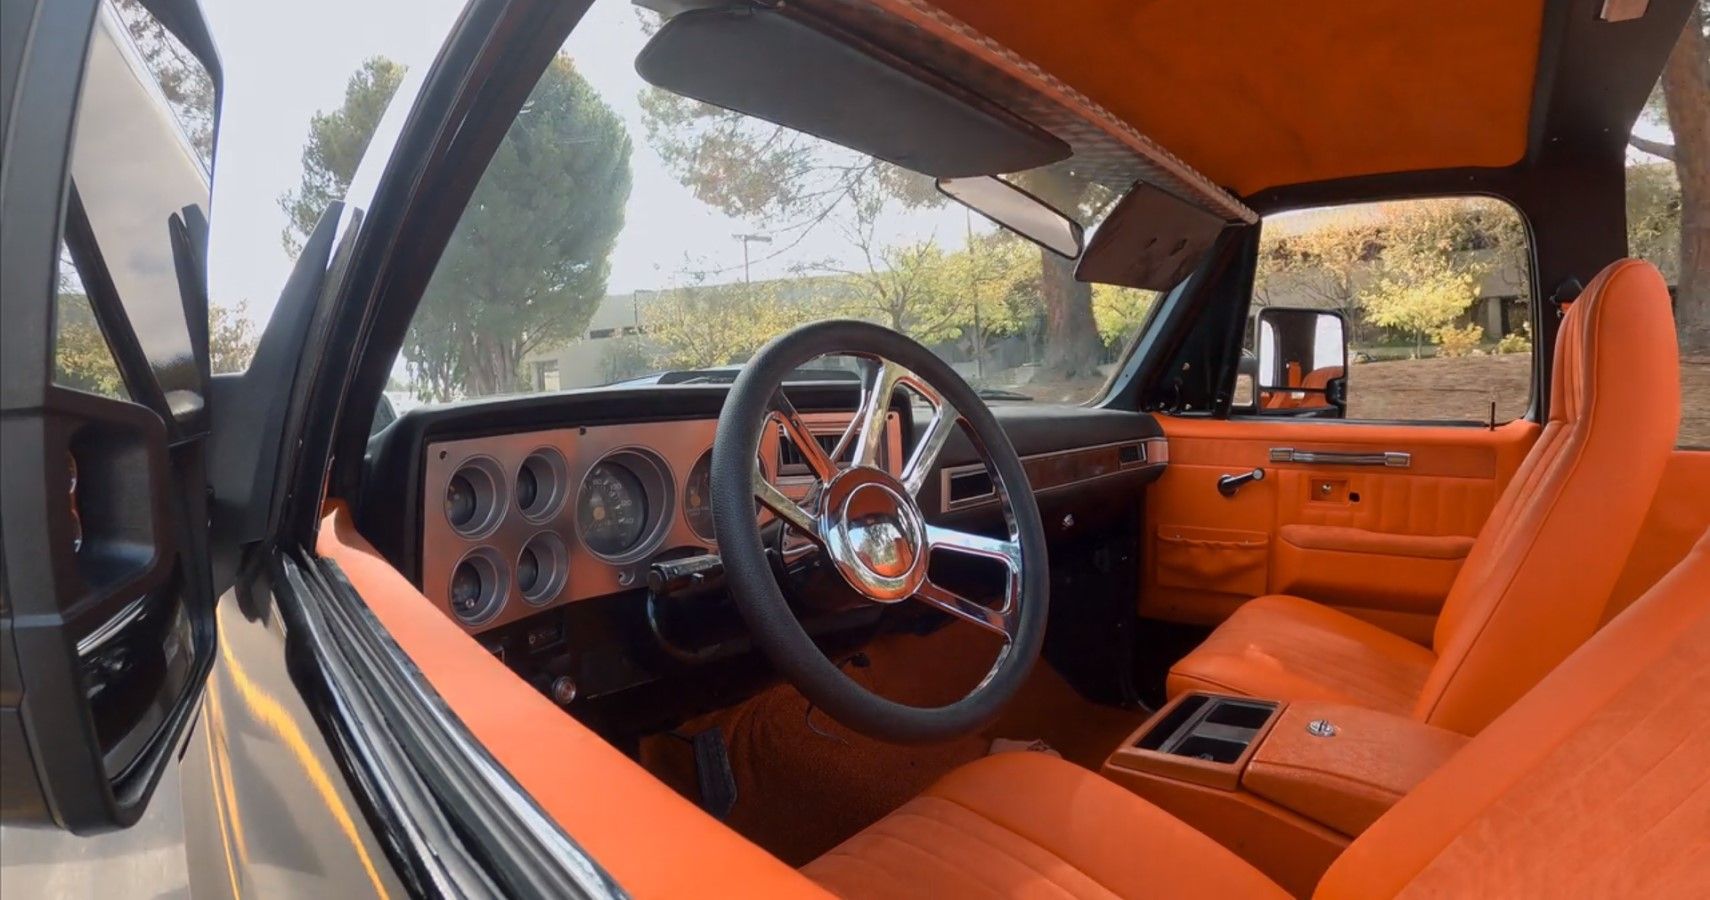 Custom 1980s Chevy Blazer by Gotham Garage interior view